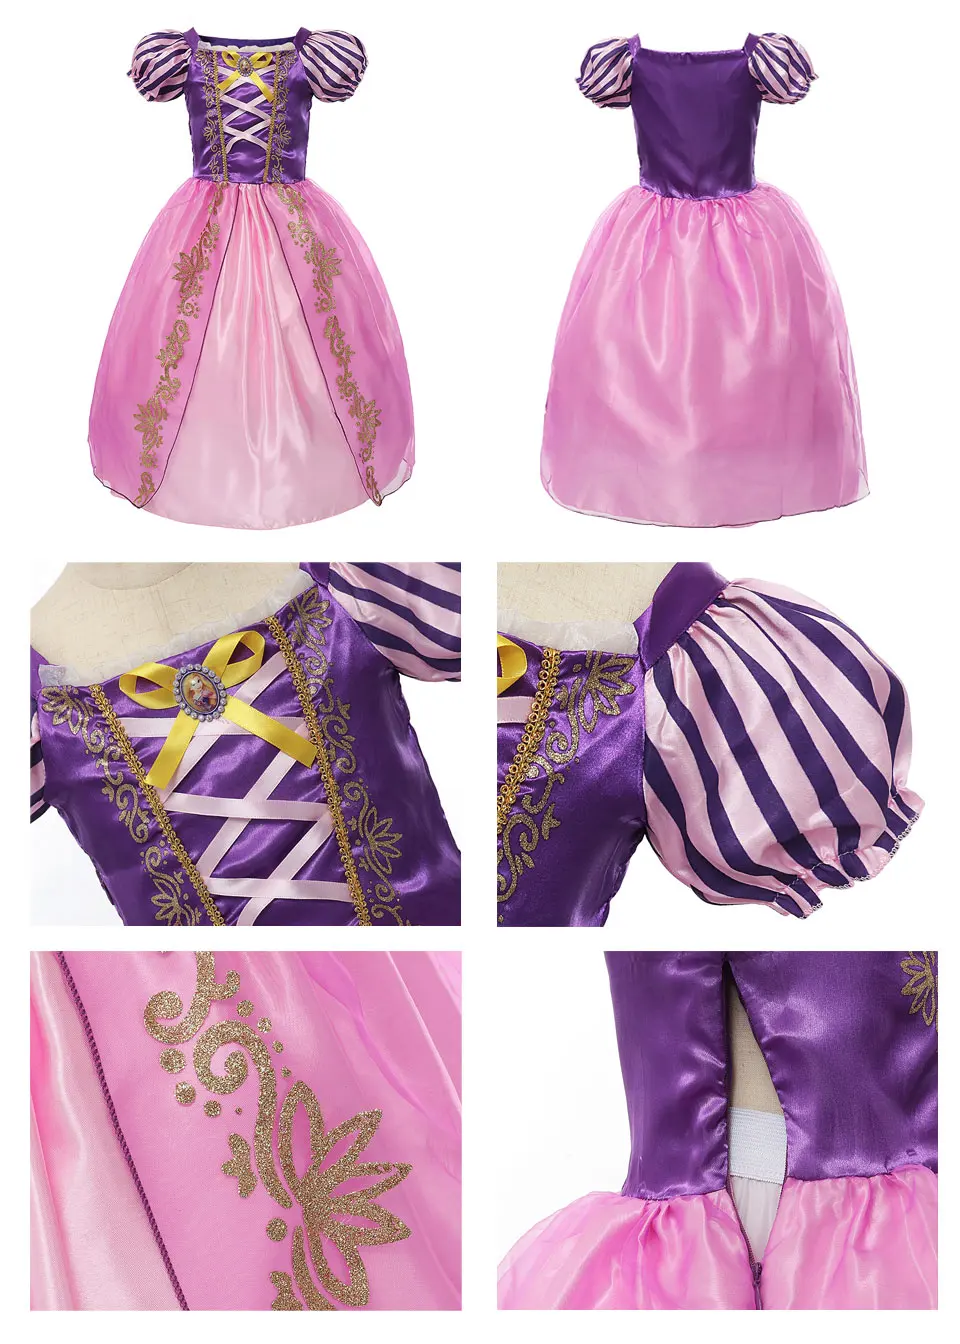 Disney Princess Costume Set for Girls Cosplay